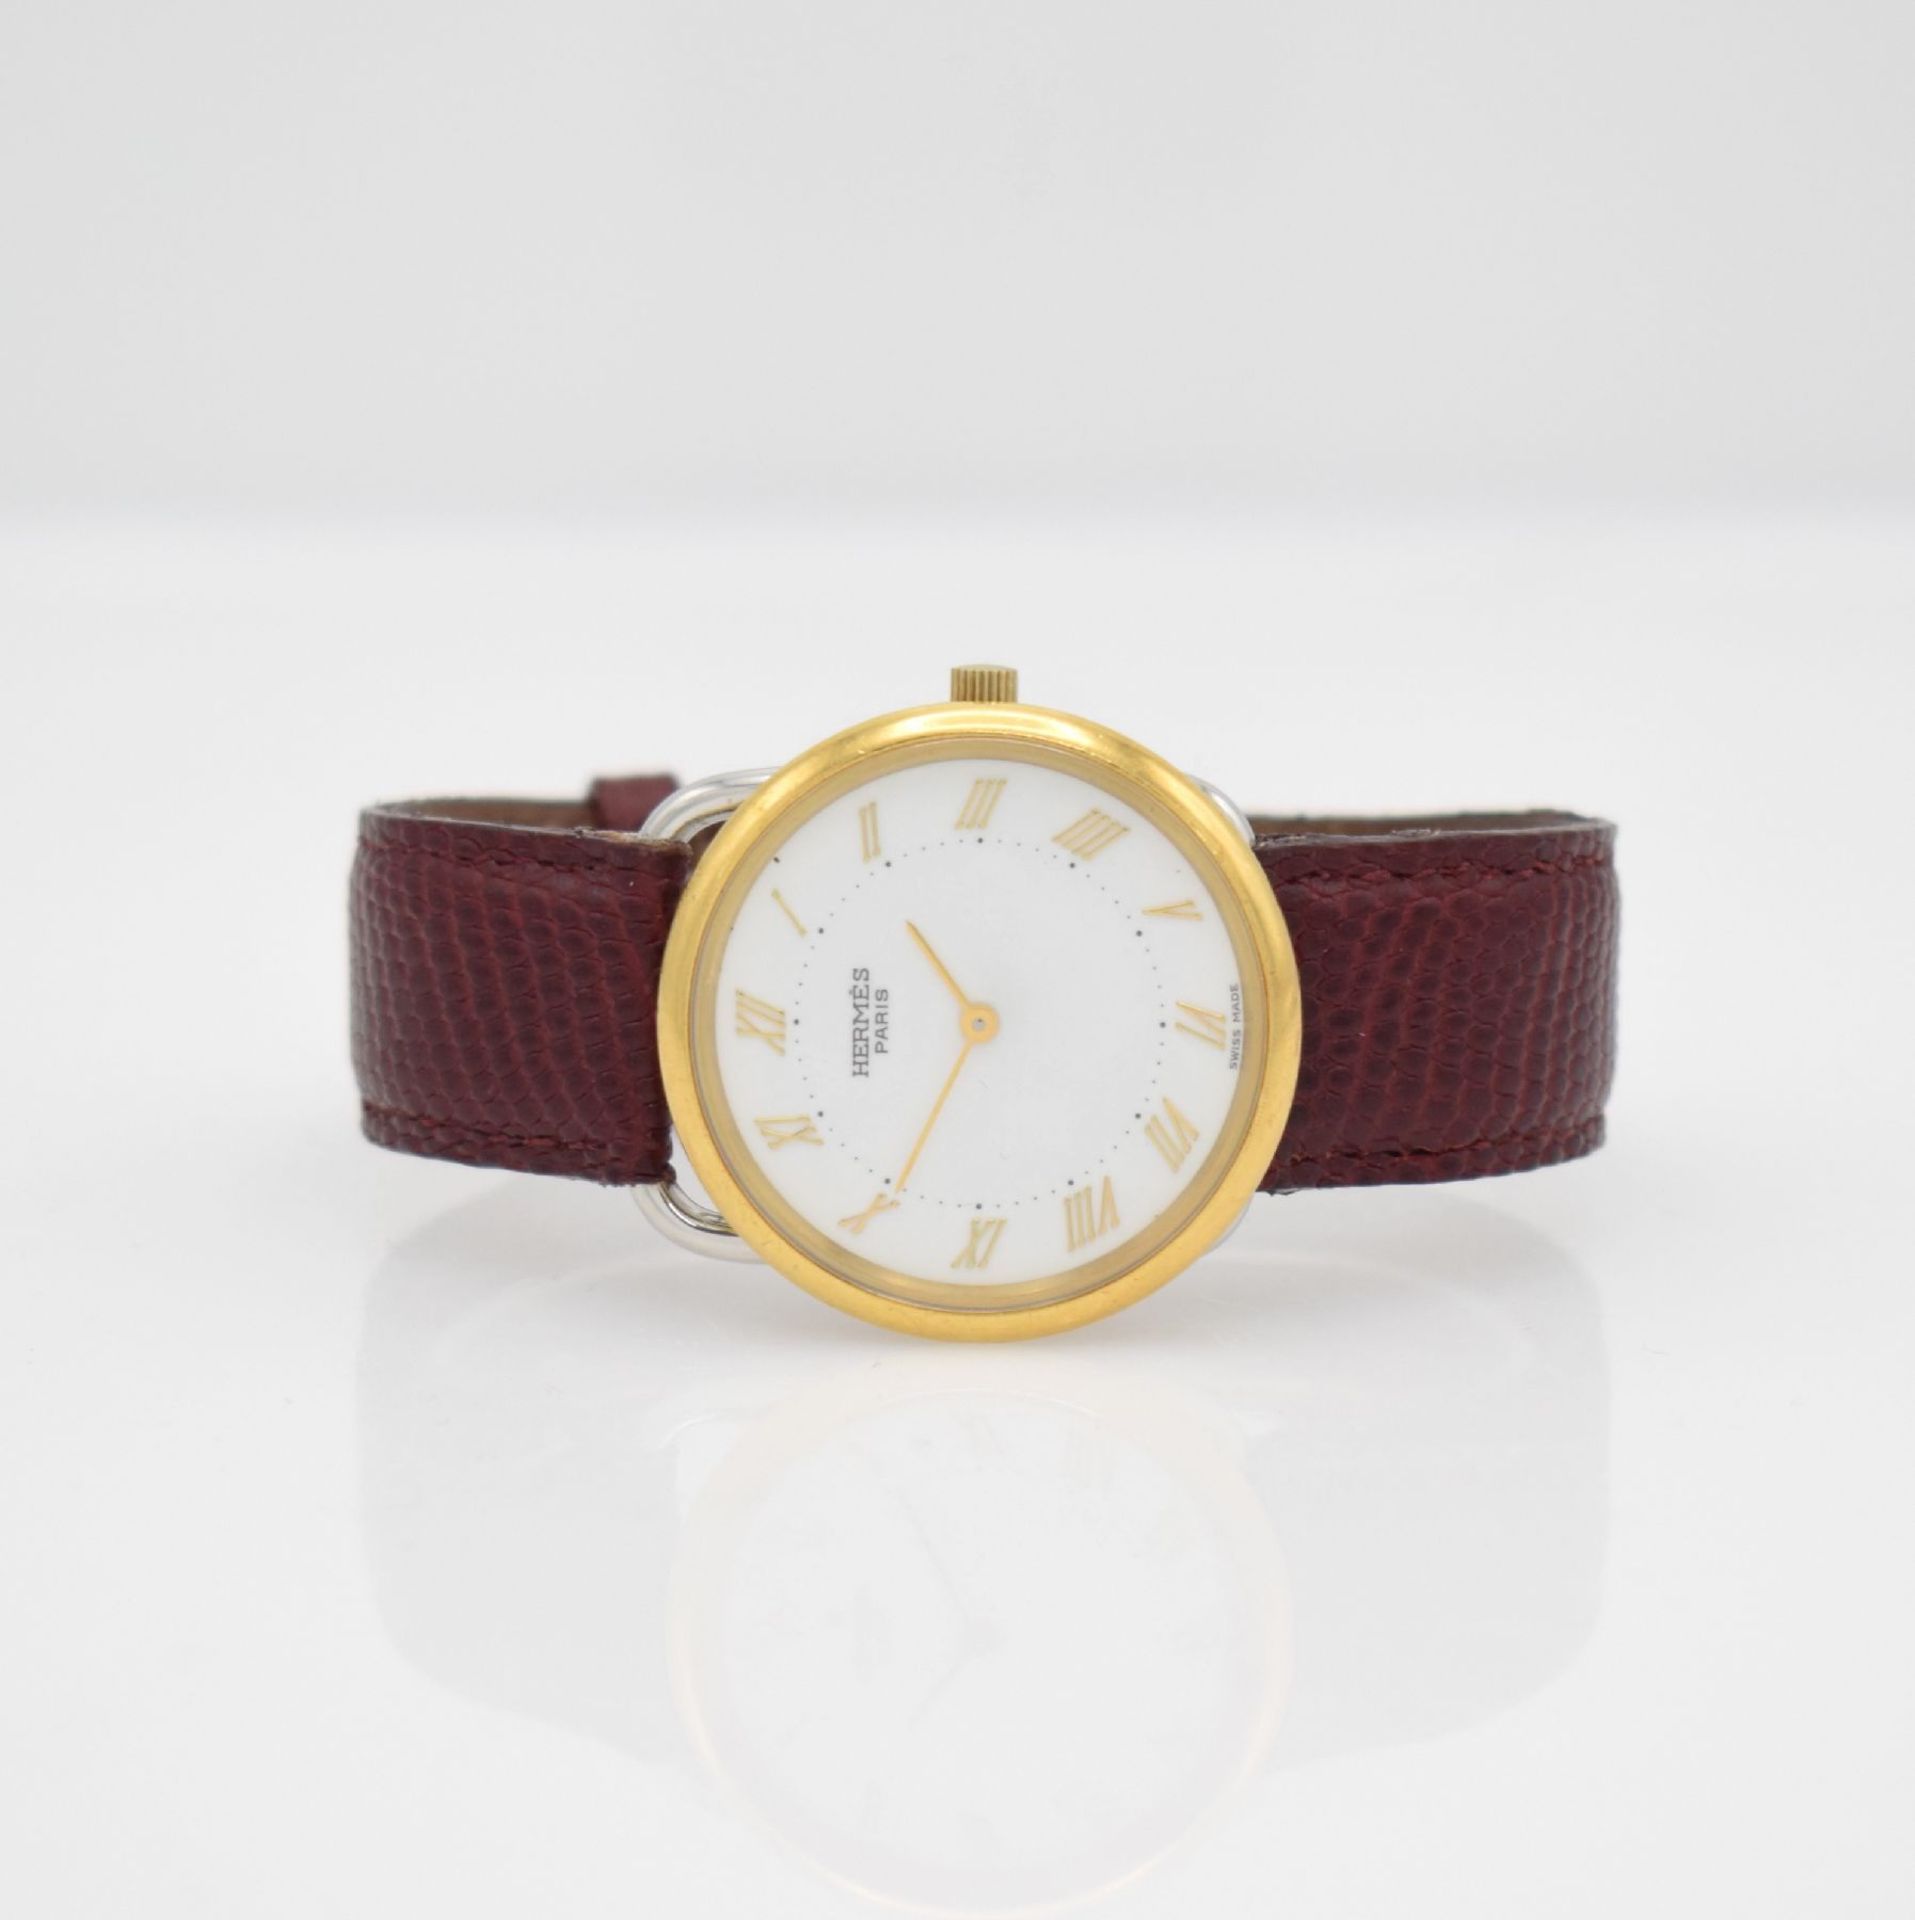 HERMES Paris wristwatch in stainless steel/gold, Switzerland around 2000, quartz, stylized lugs,